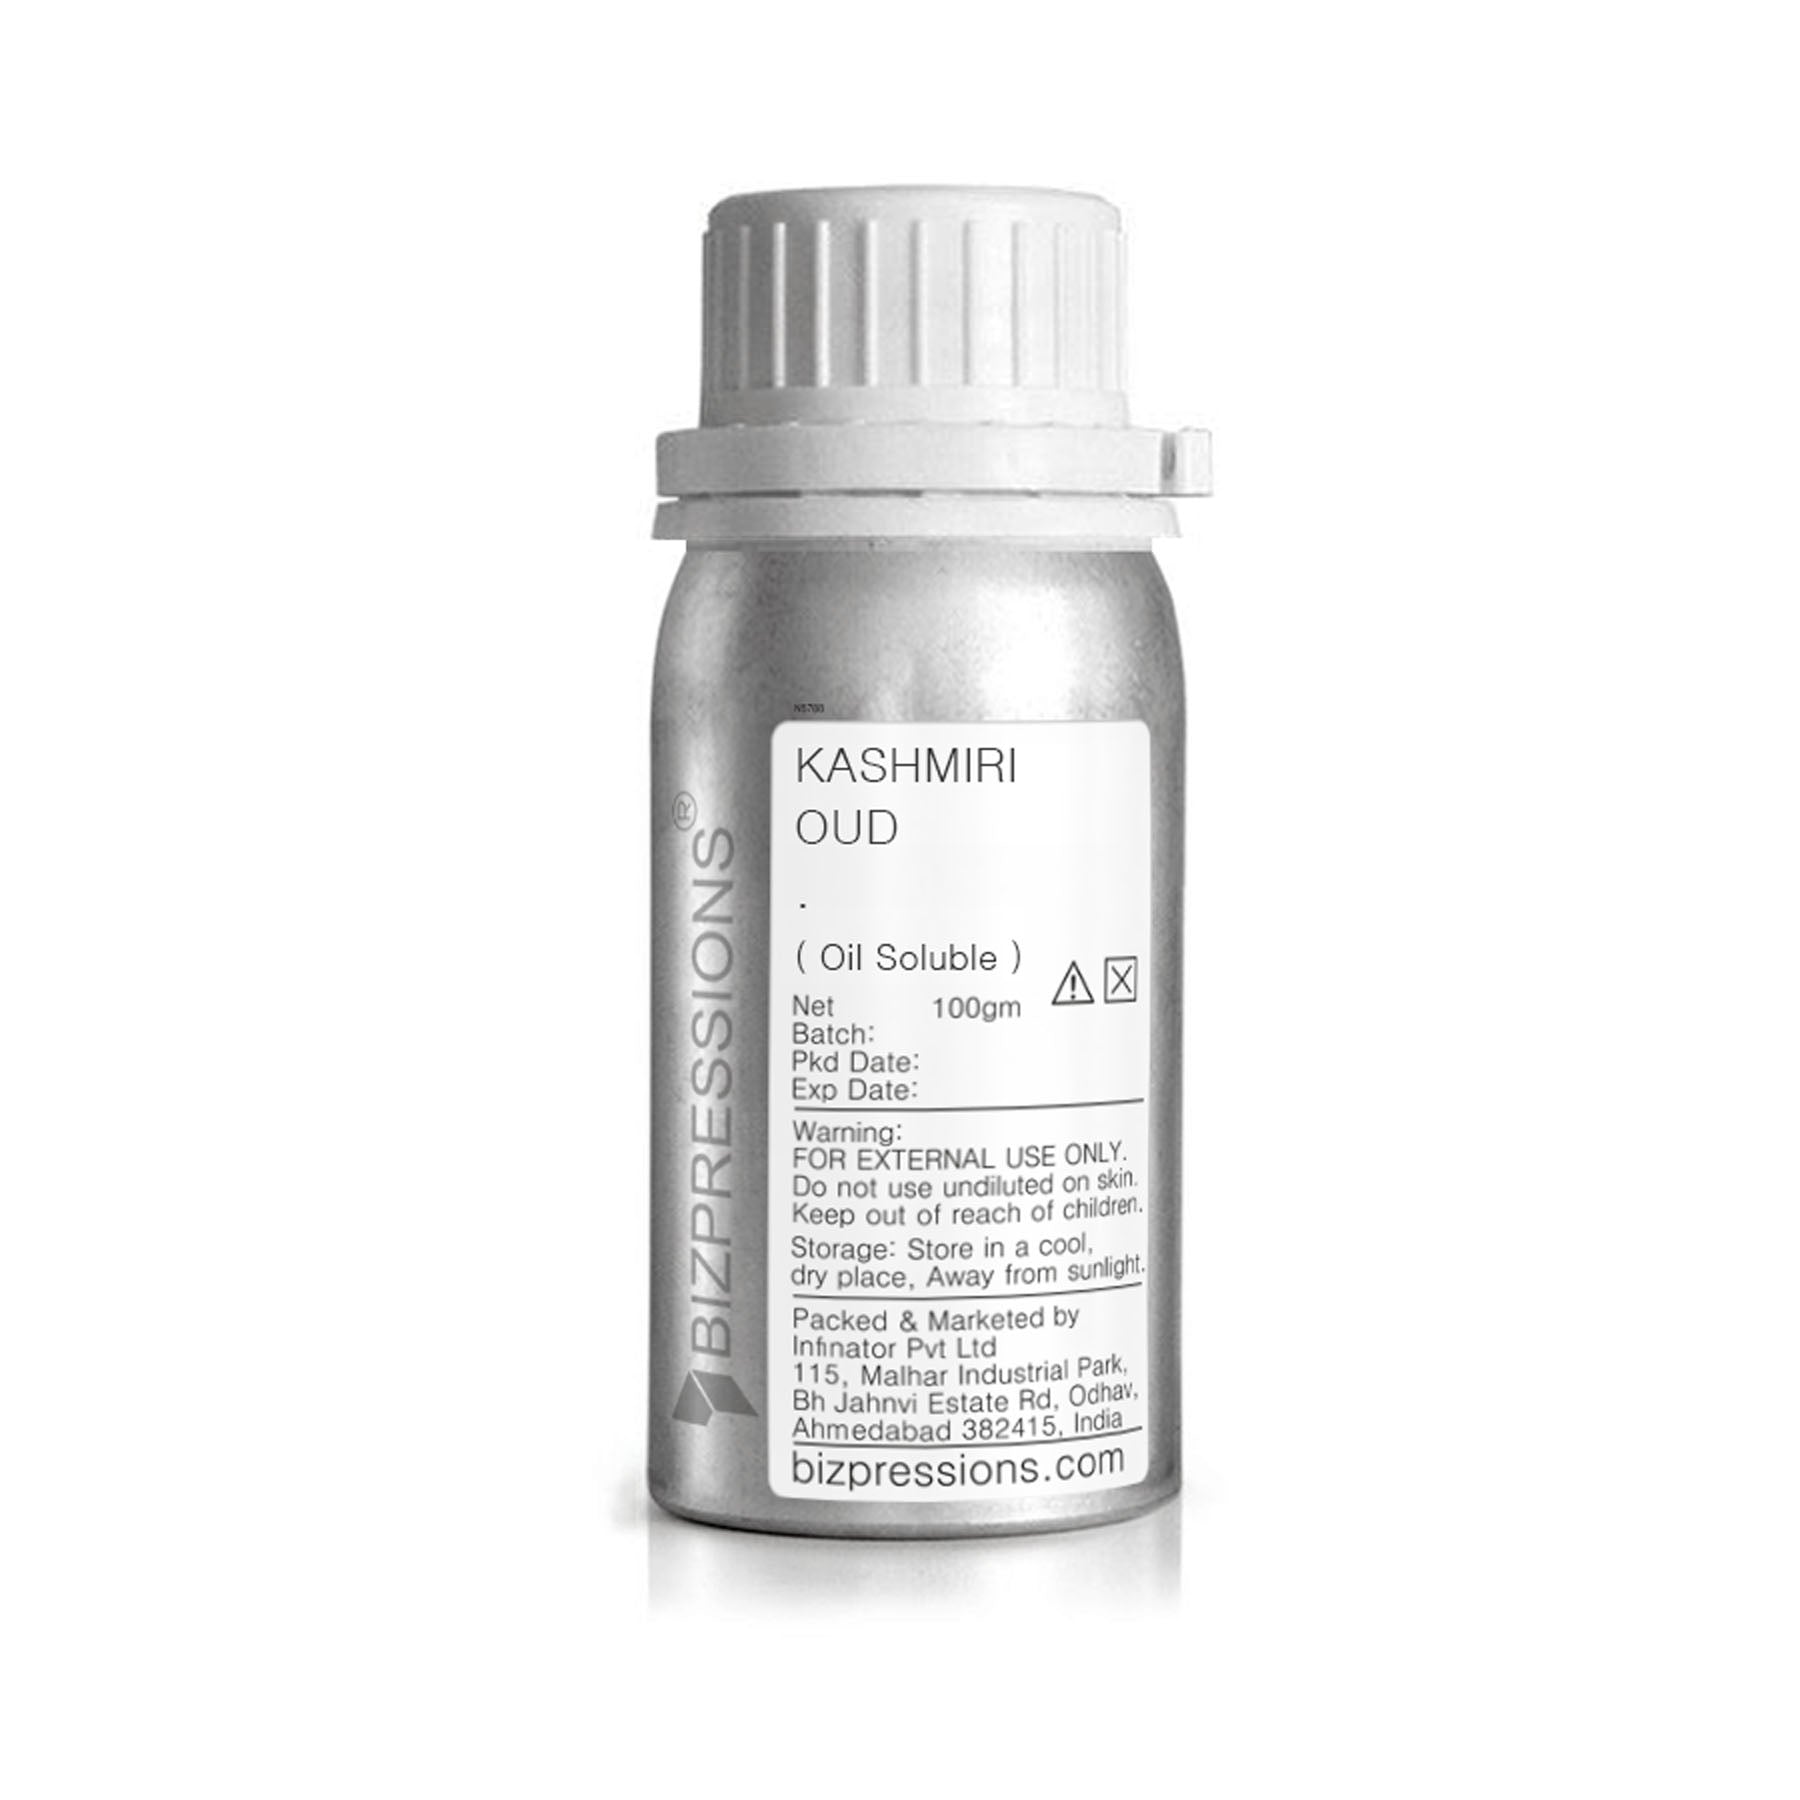 KASHMIRI OUD - Fragrance ( Oil Soluble ) - 100 gm